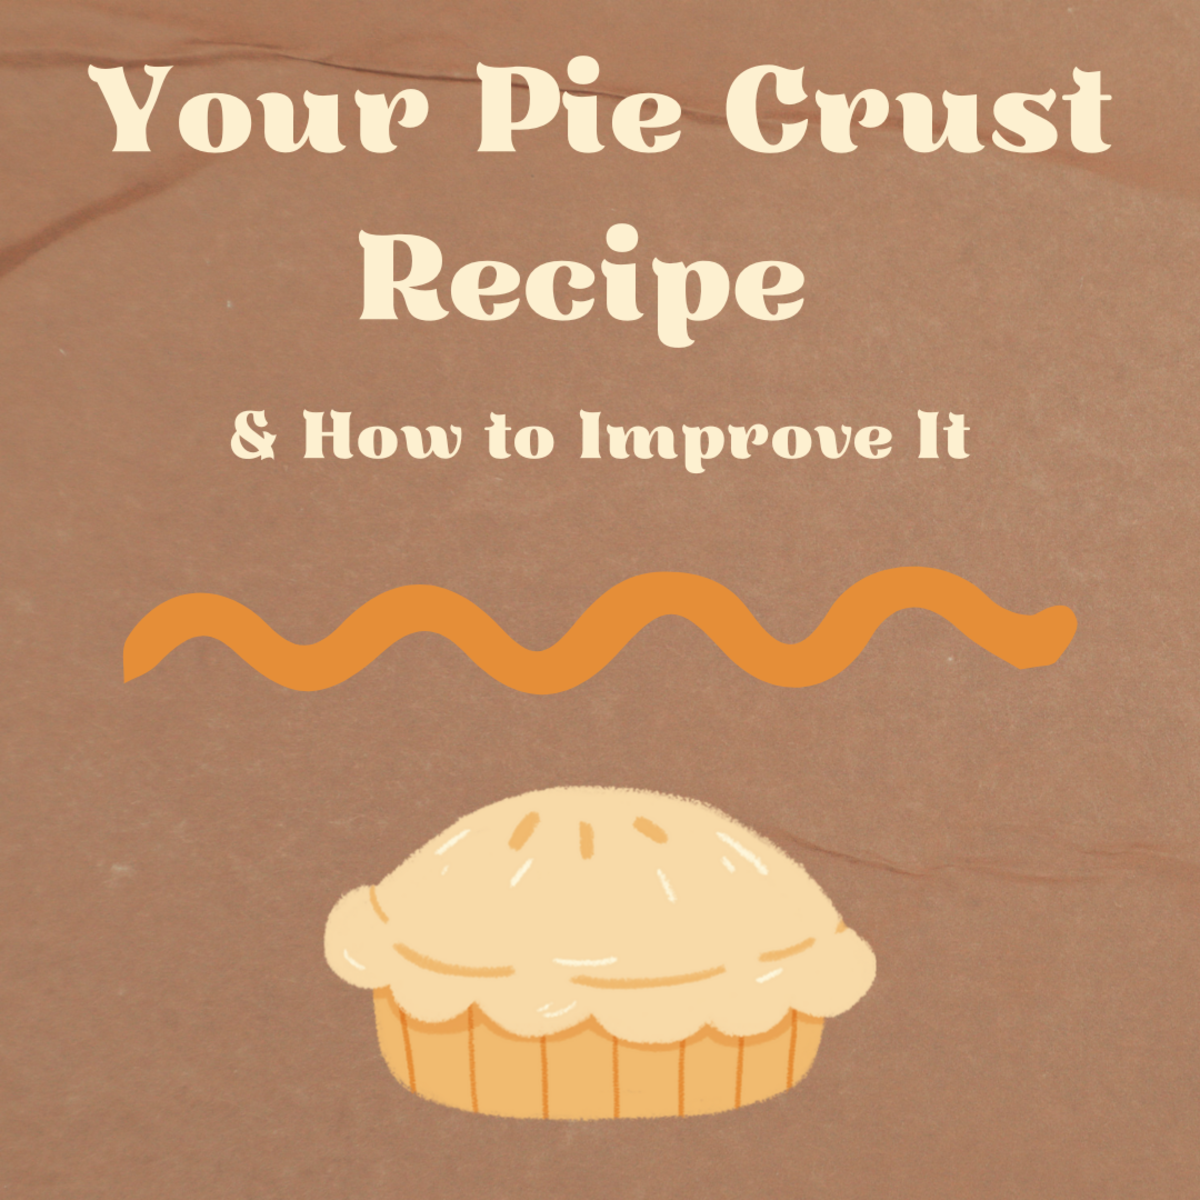 How to Improve Your Pie Crust Recipe